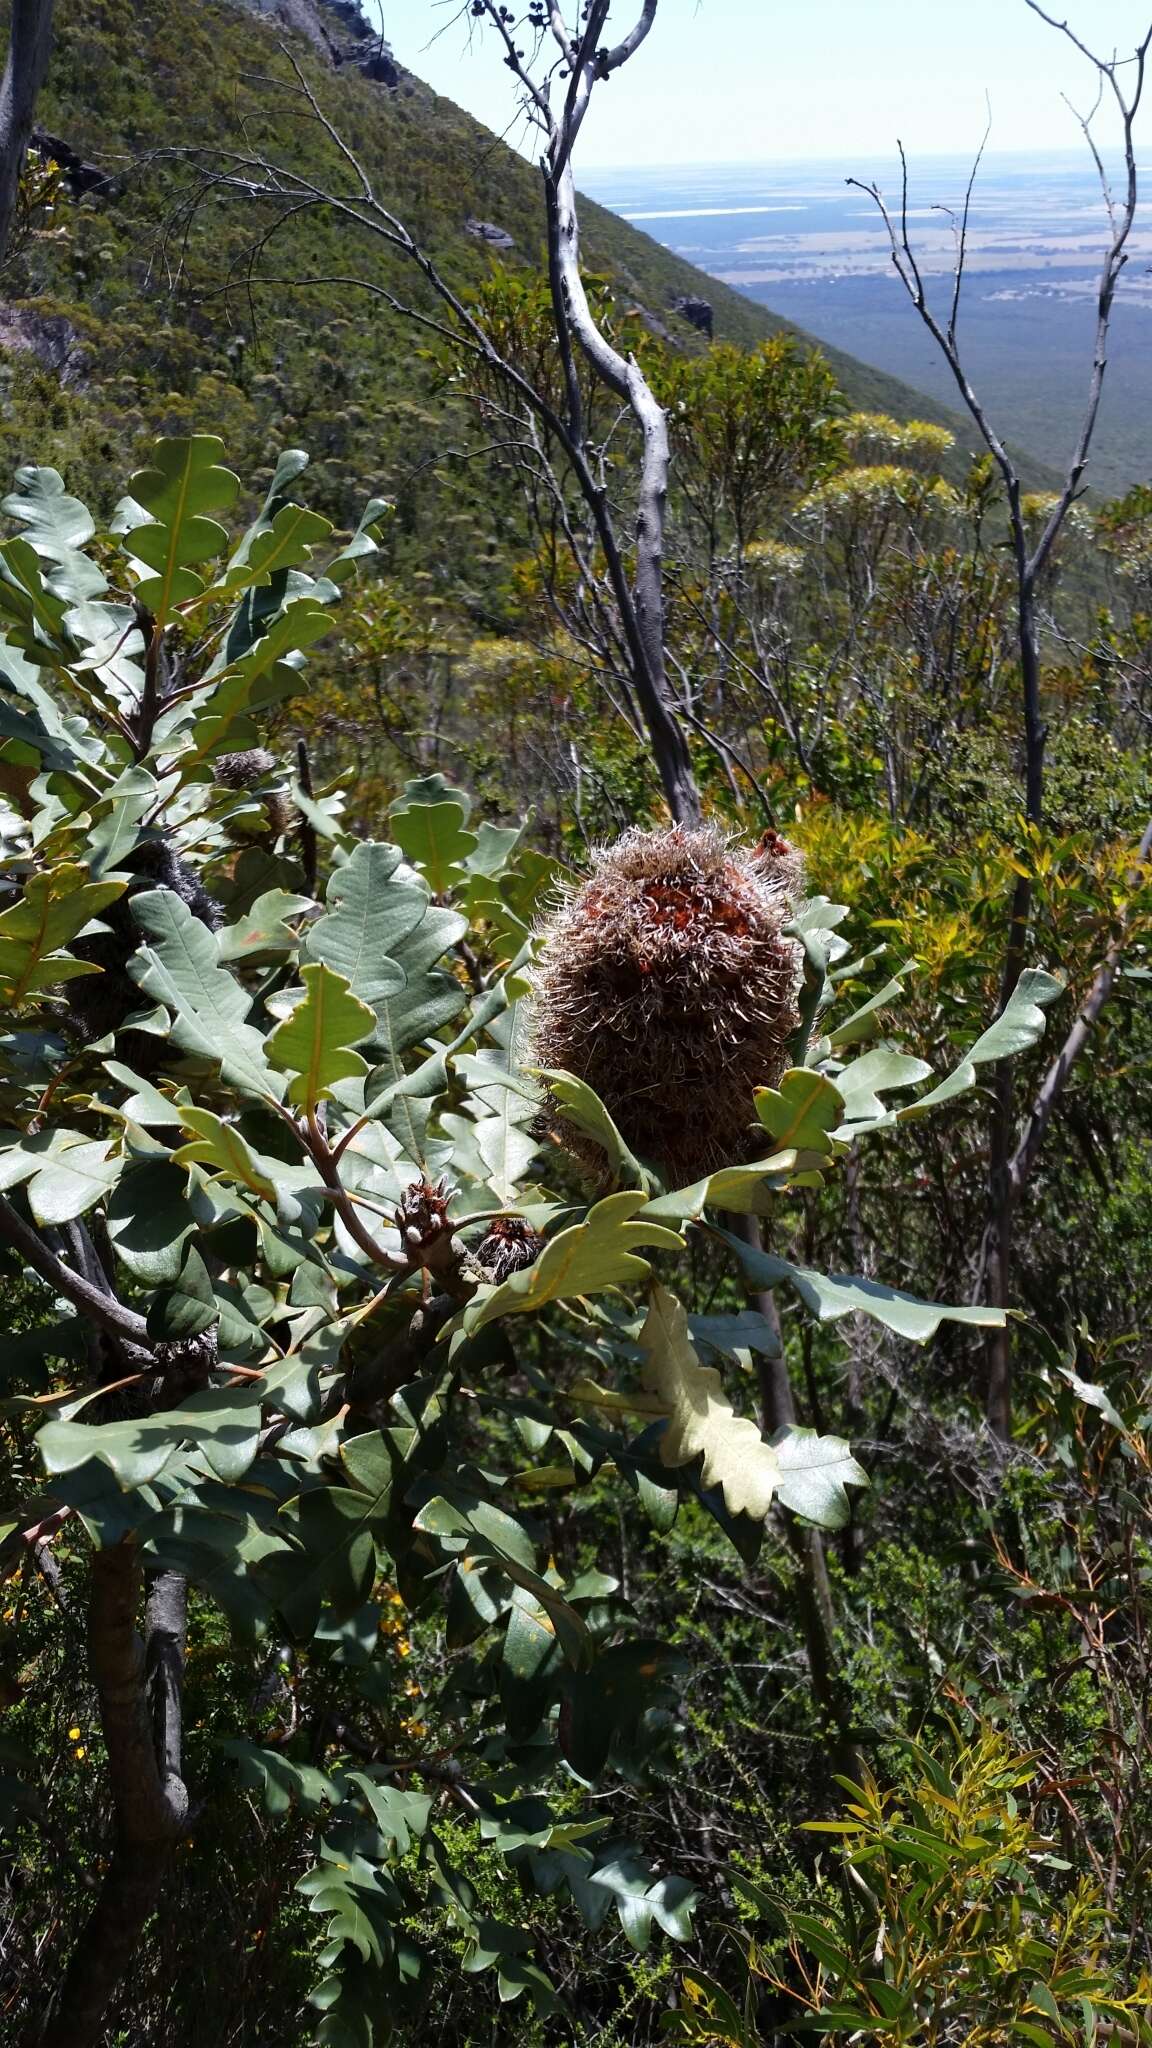 Image of Banksia solandri R. Br.